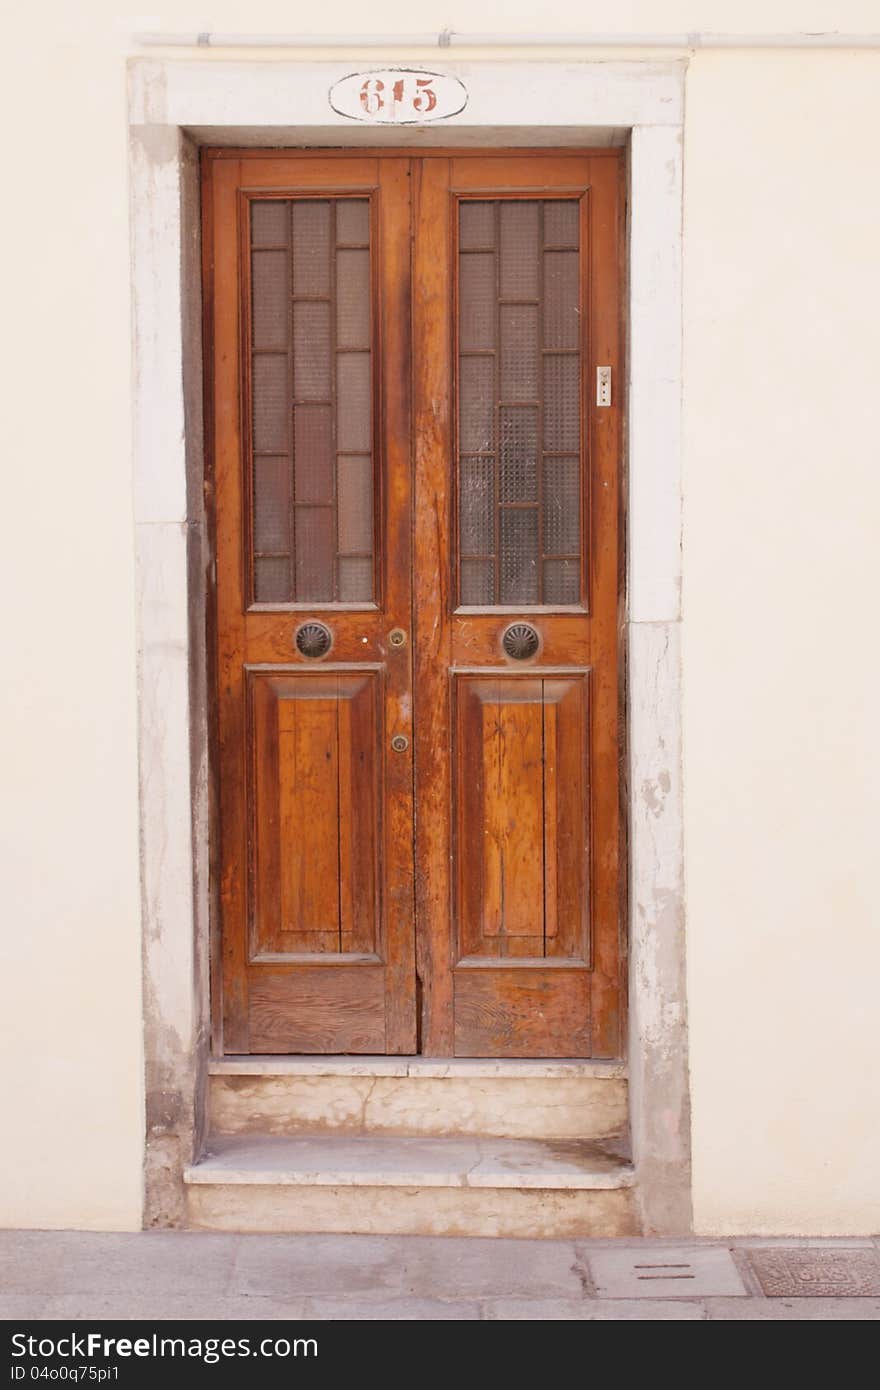 Old closed door in Venice, Italy.